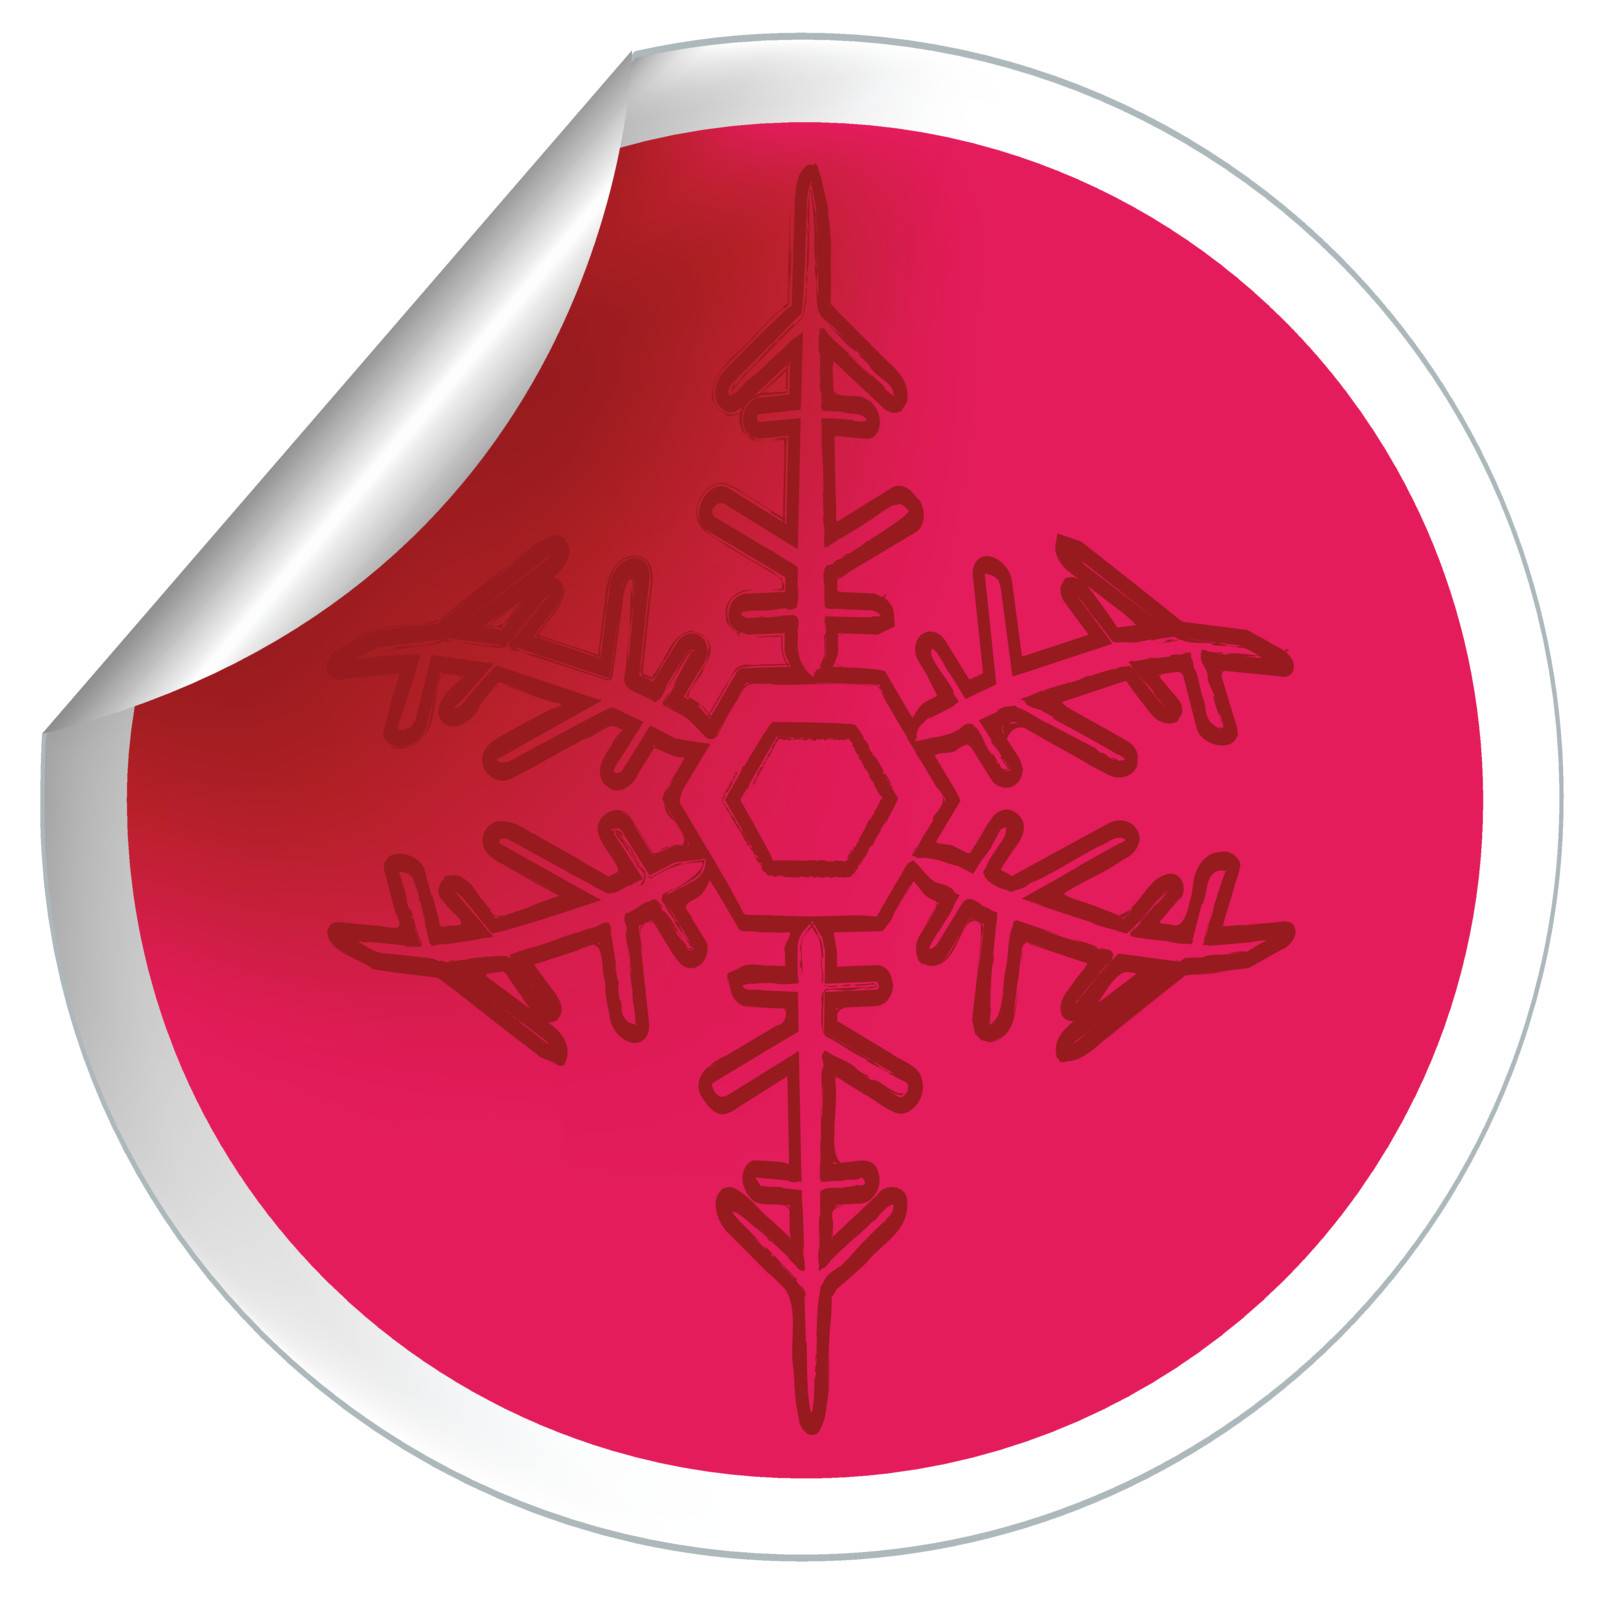 Snowflake label, sticker illustration